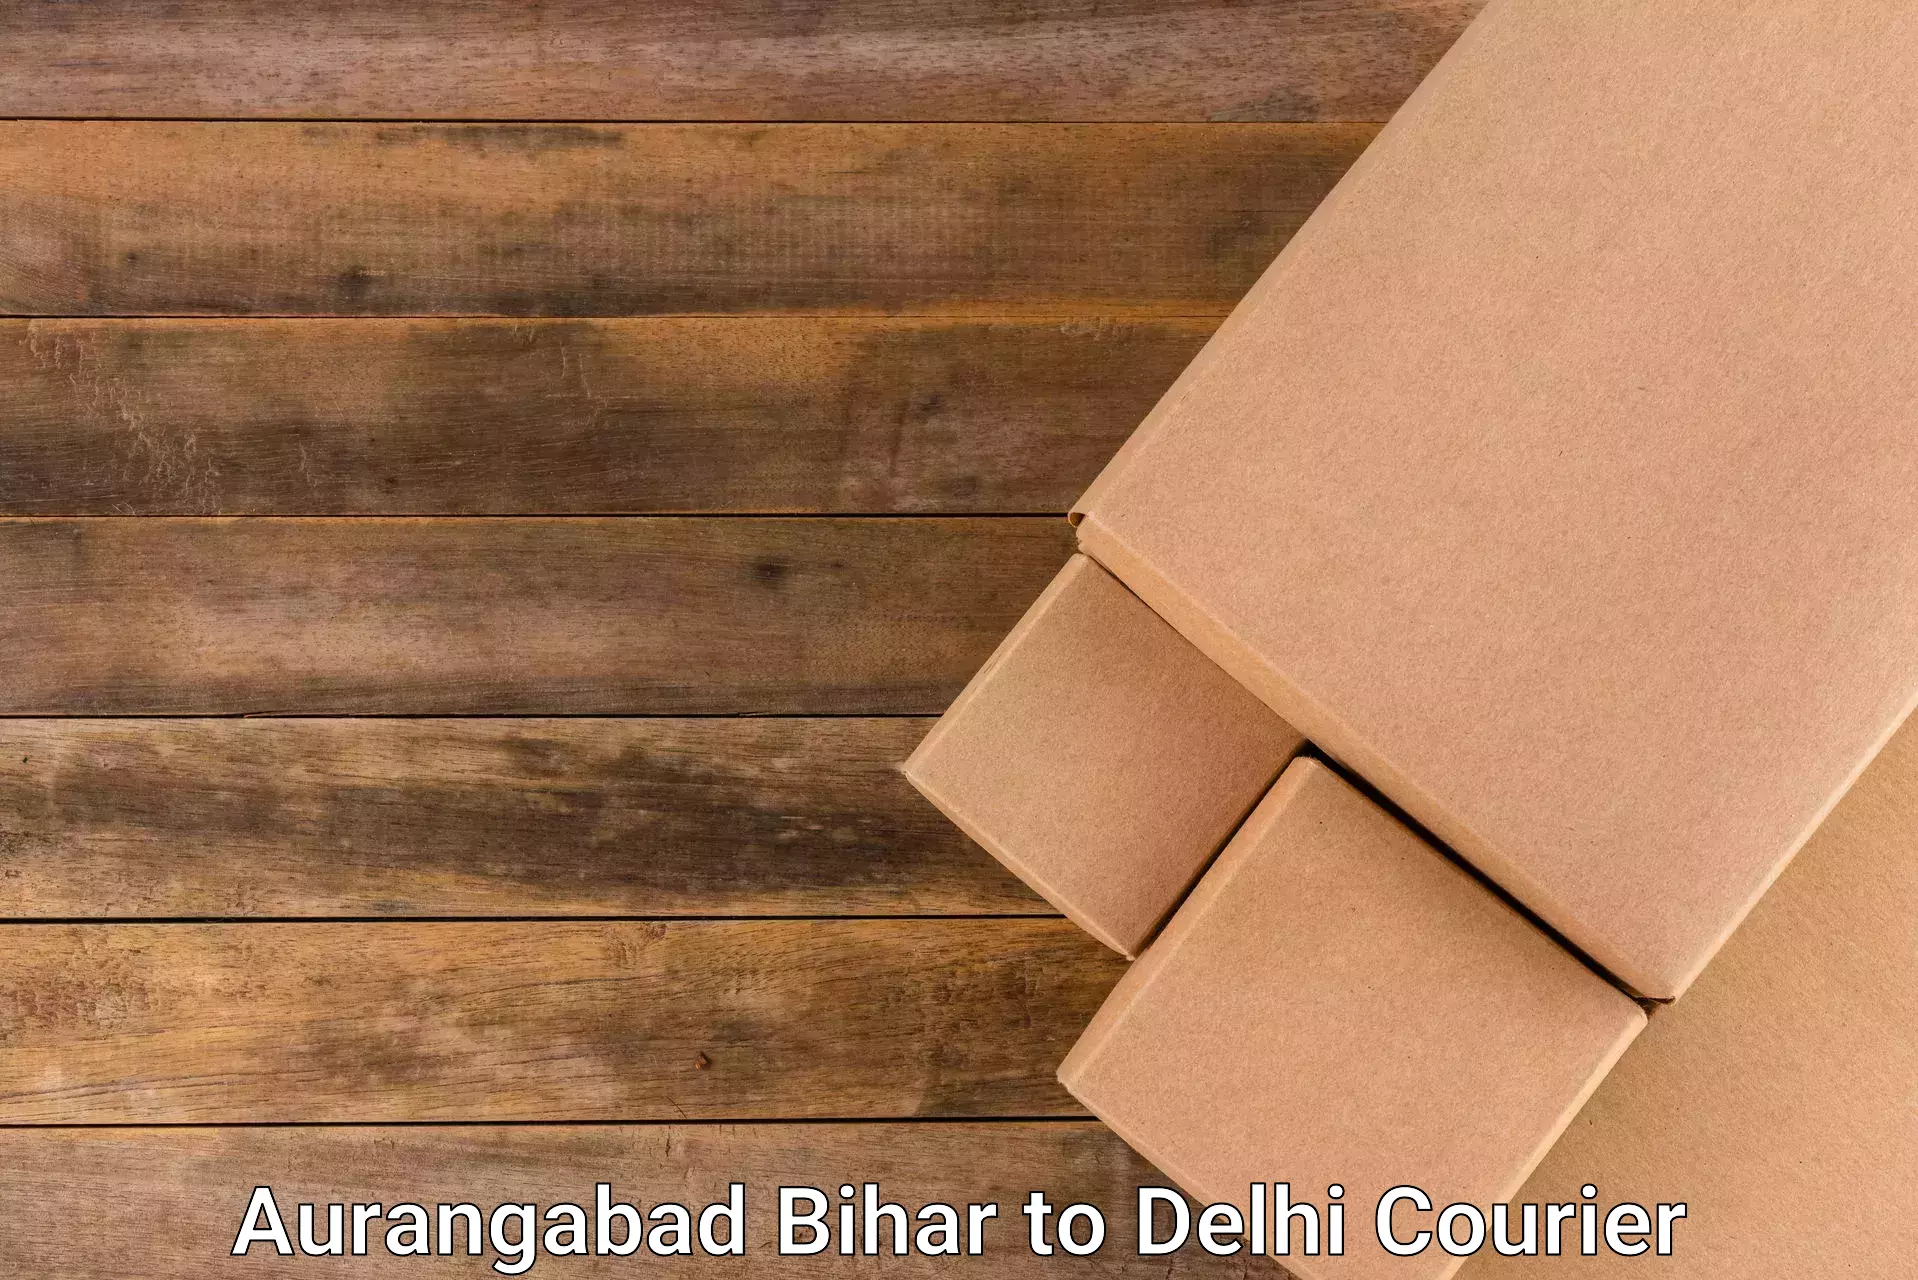 User-friendly courier app Aurangabad Bihar to NCR